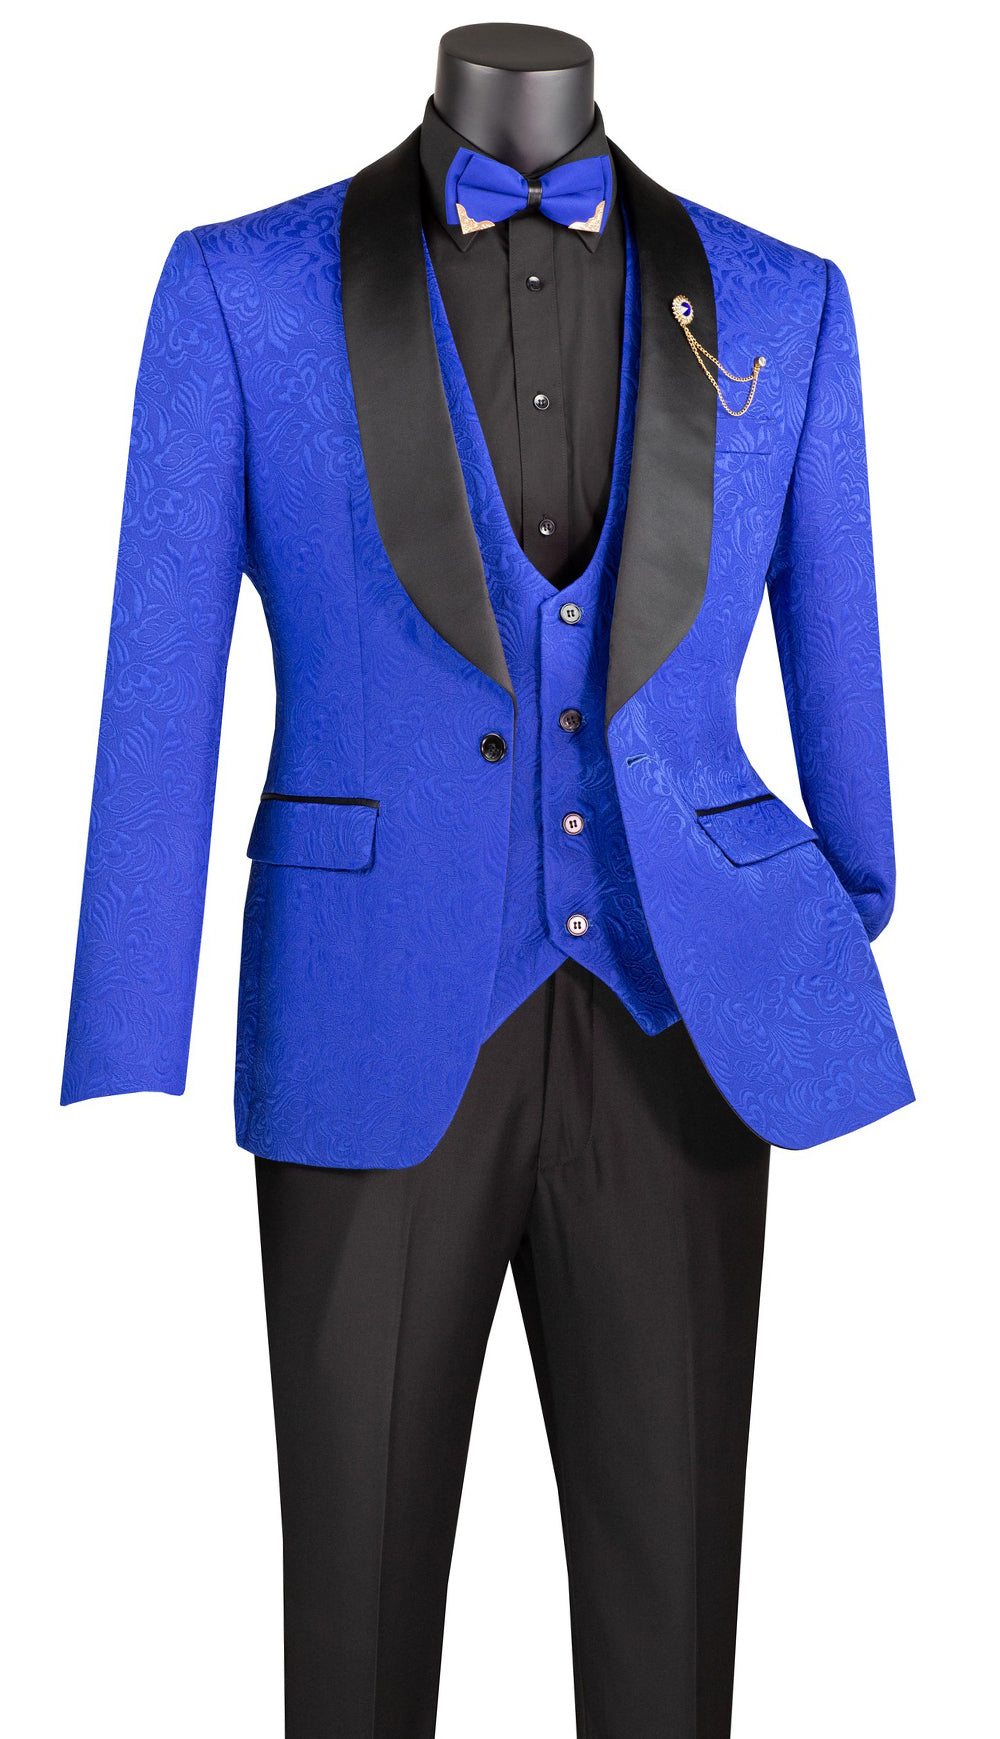 Vinci Tuxedo TVSJ-1-Royal - Church Suits For Less